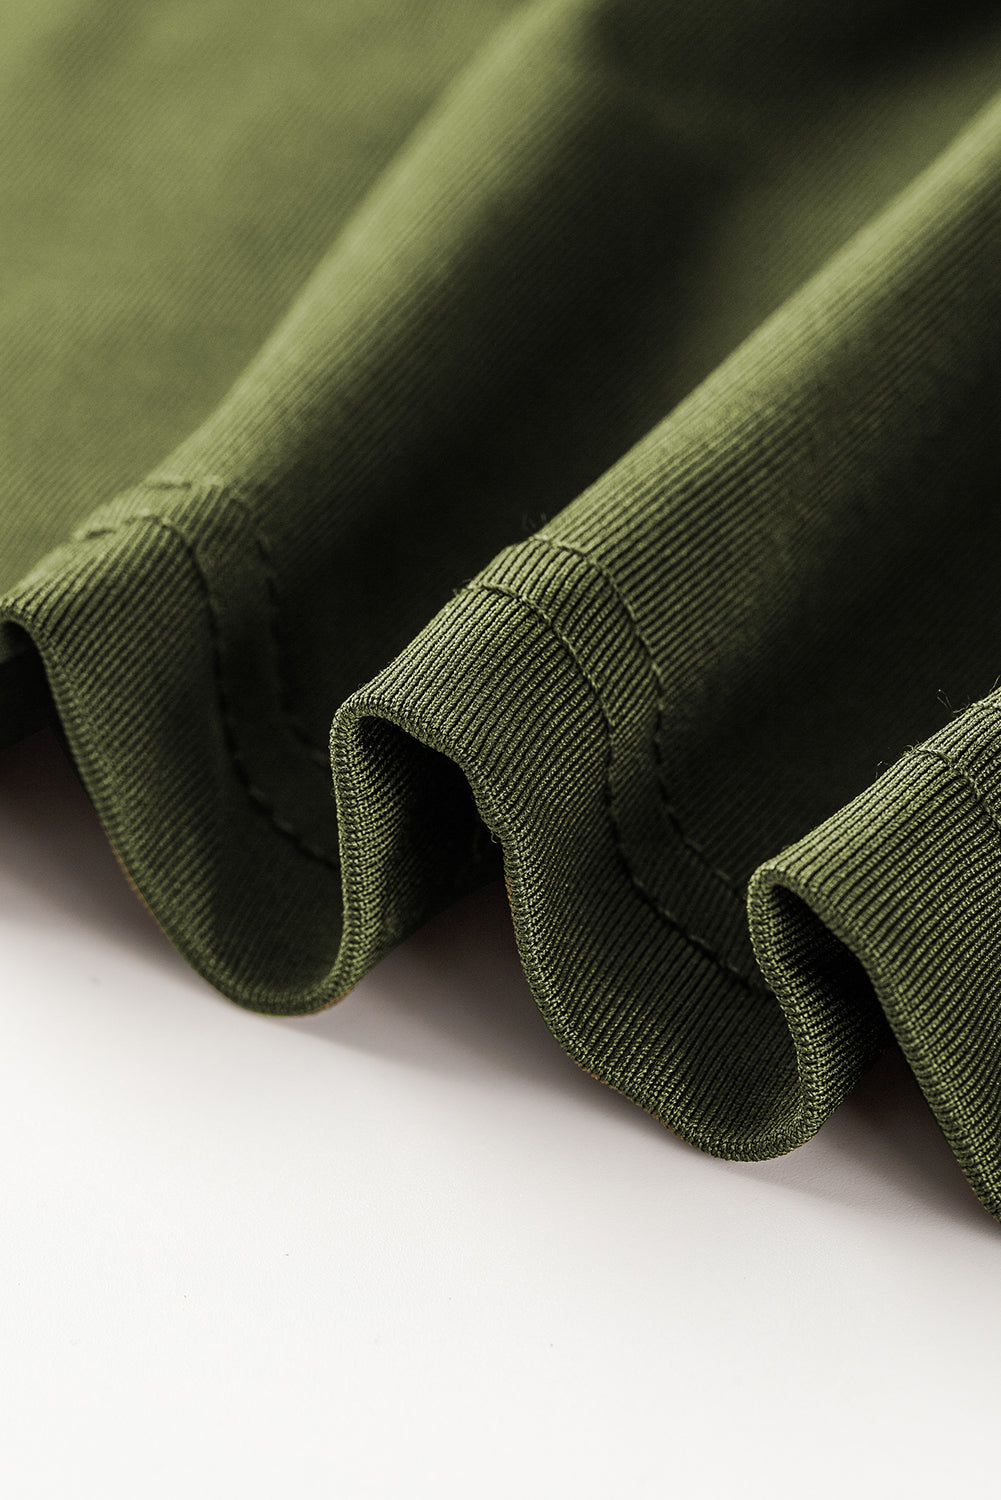 Green Asymmetrical Neckline Long Sleeve Knit Top